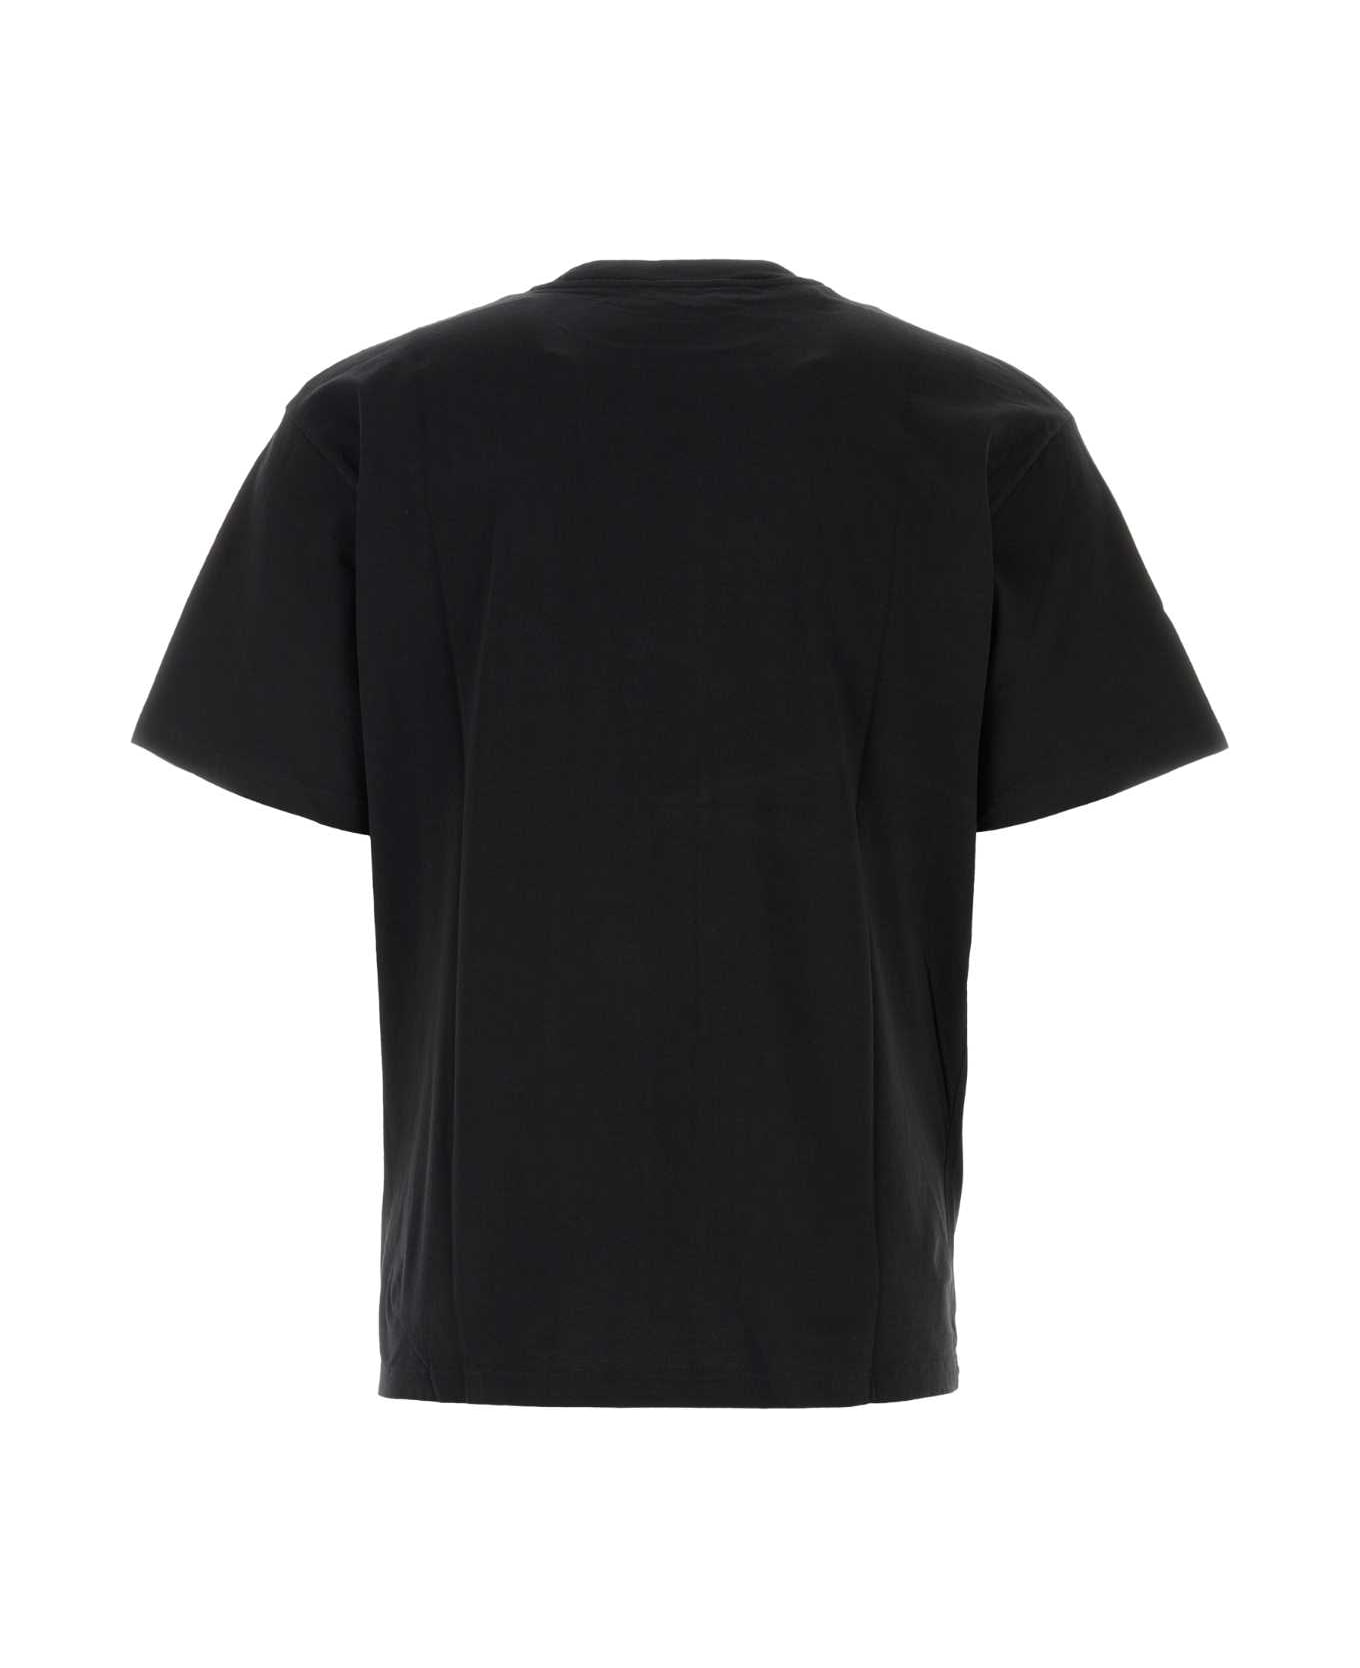 Aries Black Cotton T-shirt - BLACK